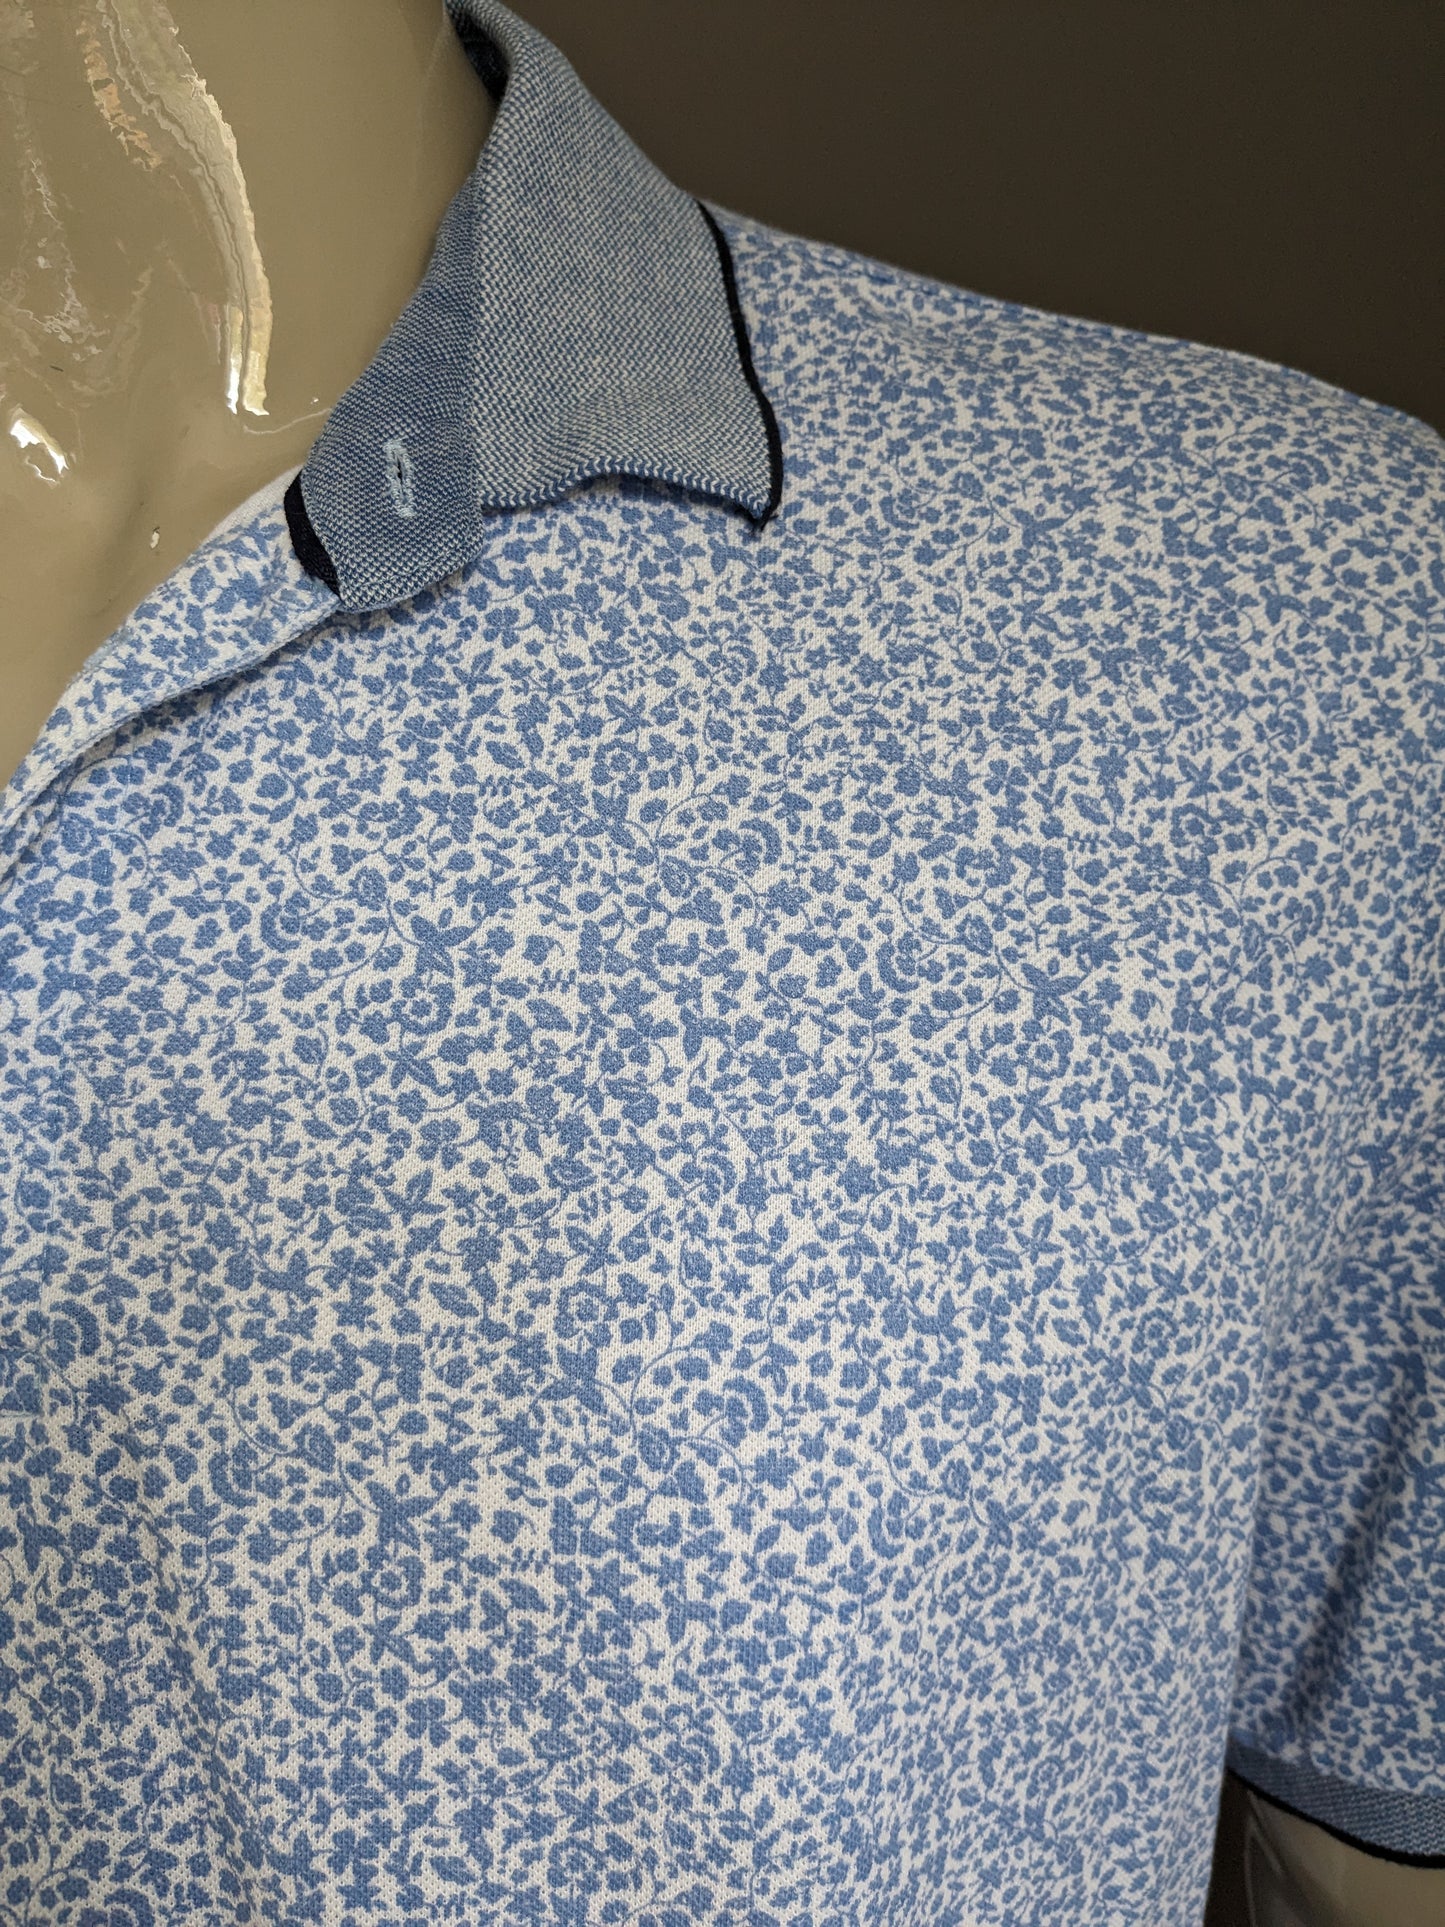 Westbury Premium Polo. Print de fleurs blanches bleues. Taille 2xl / xxl.